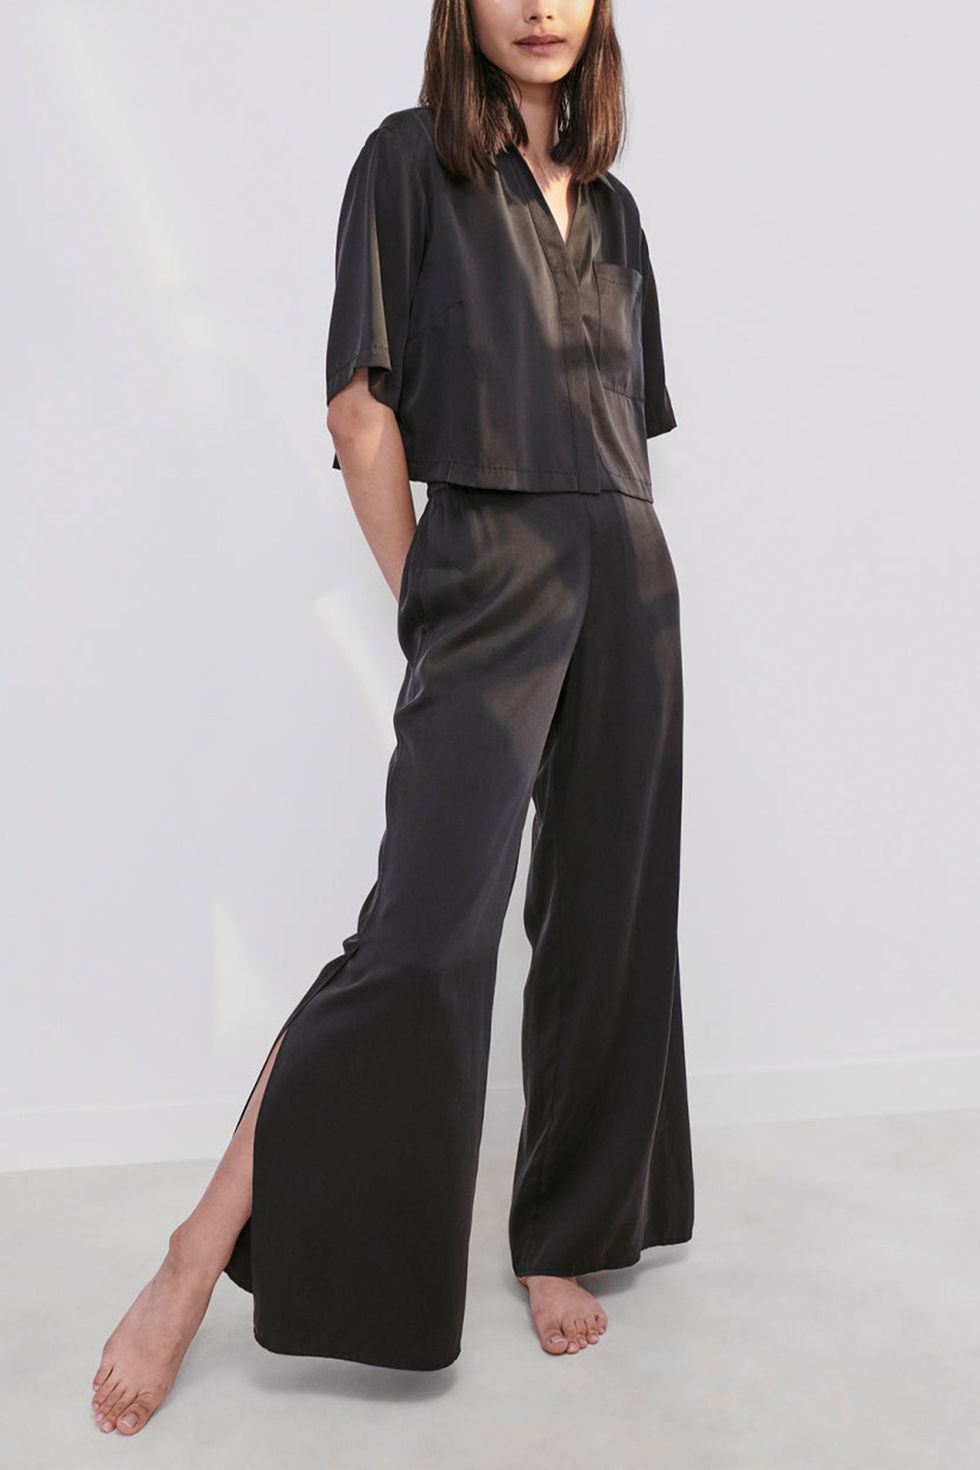 Sexy Satin Plain Black Pyjamas PJs Set Full Length Long Sleeve Neglige –  Just For You Boutique®